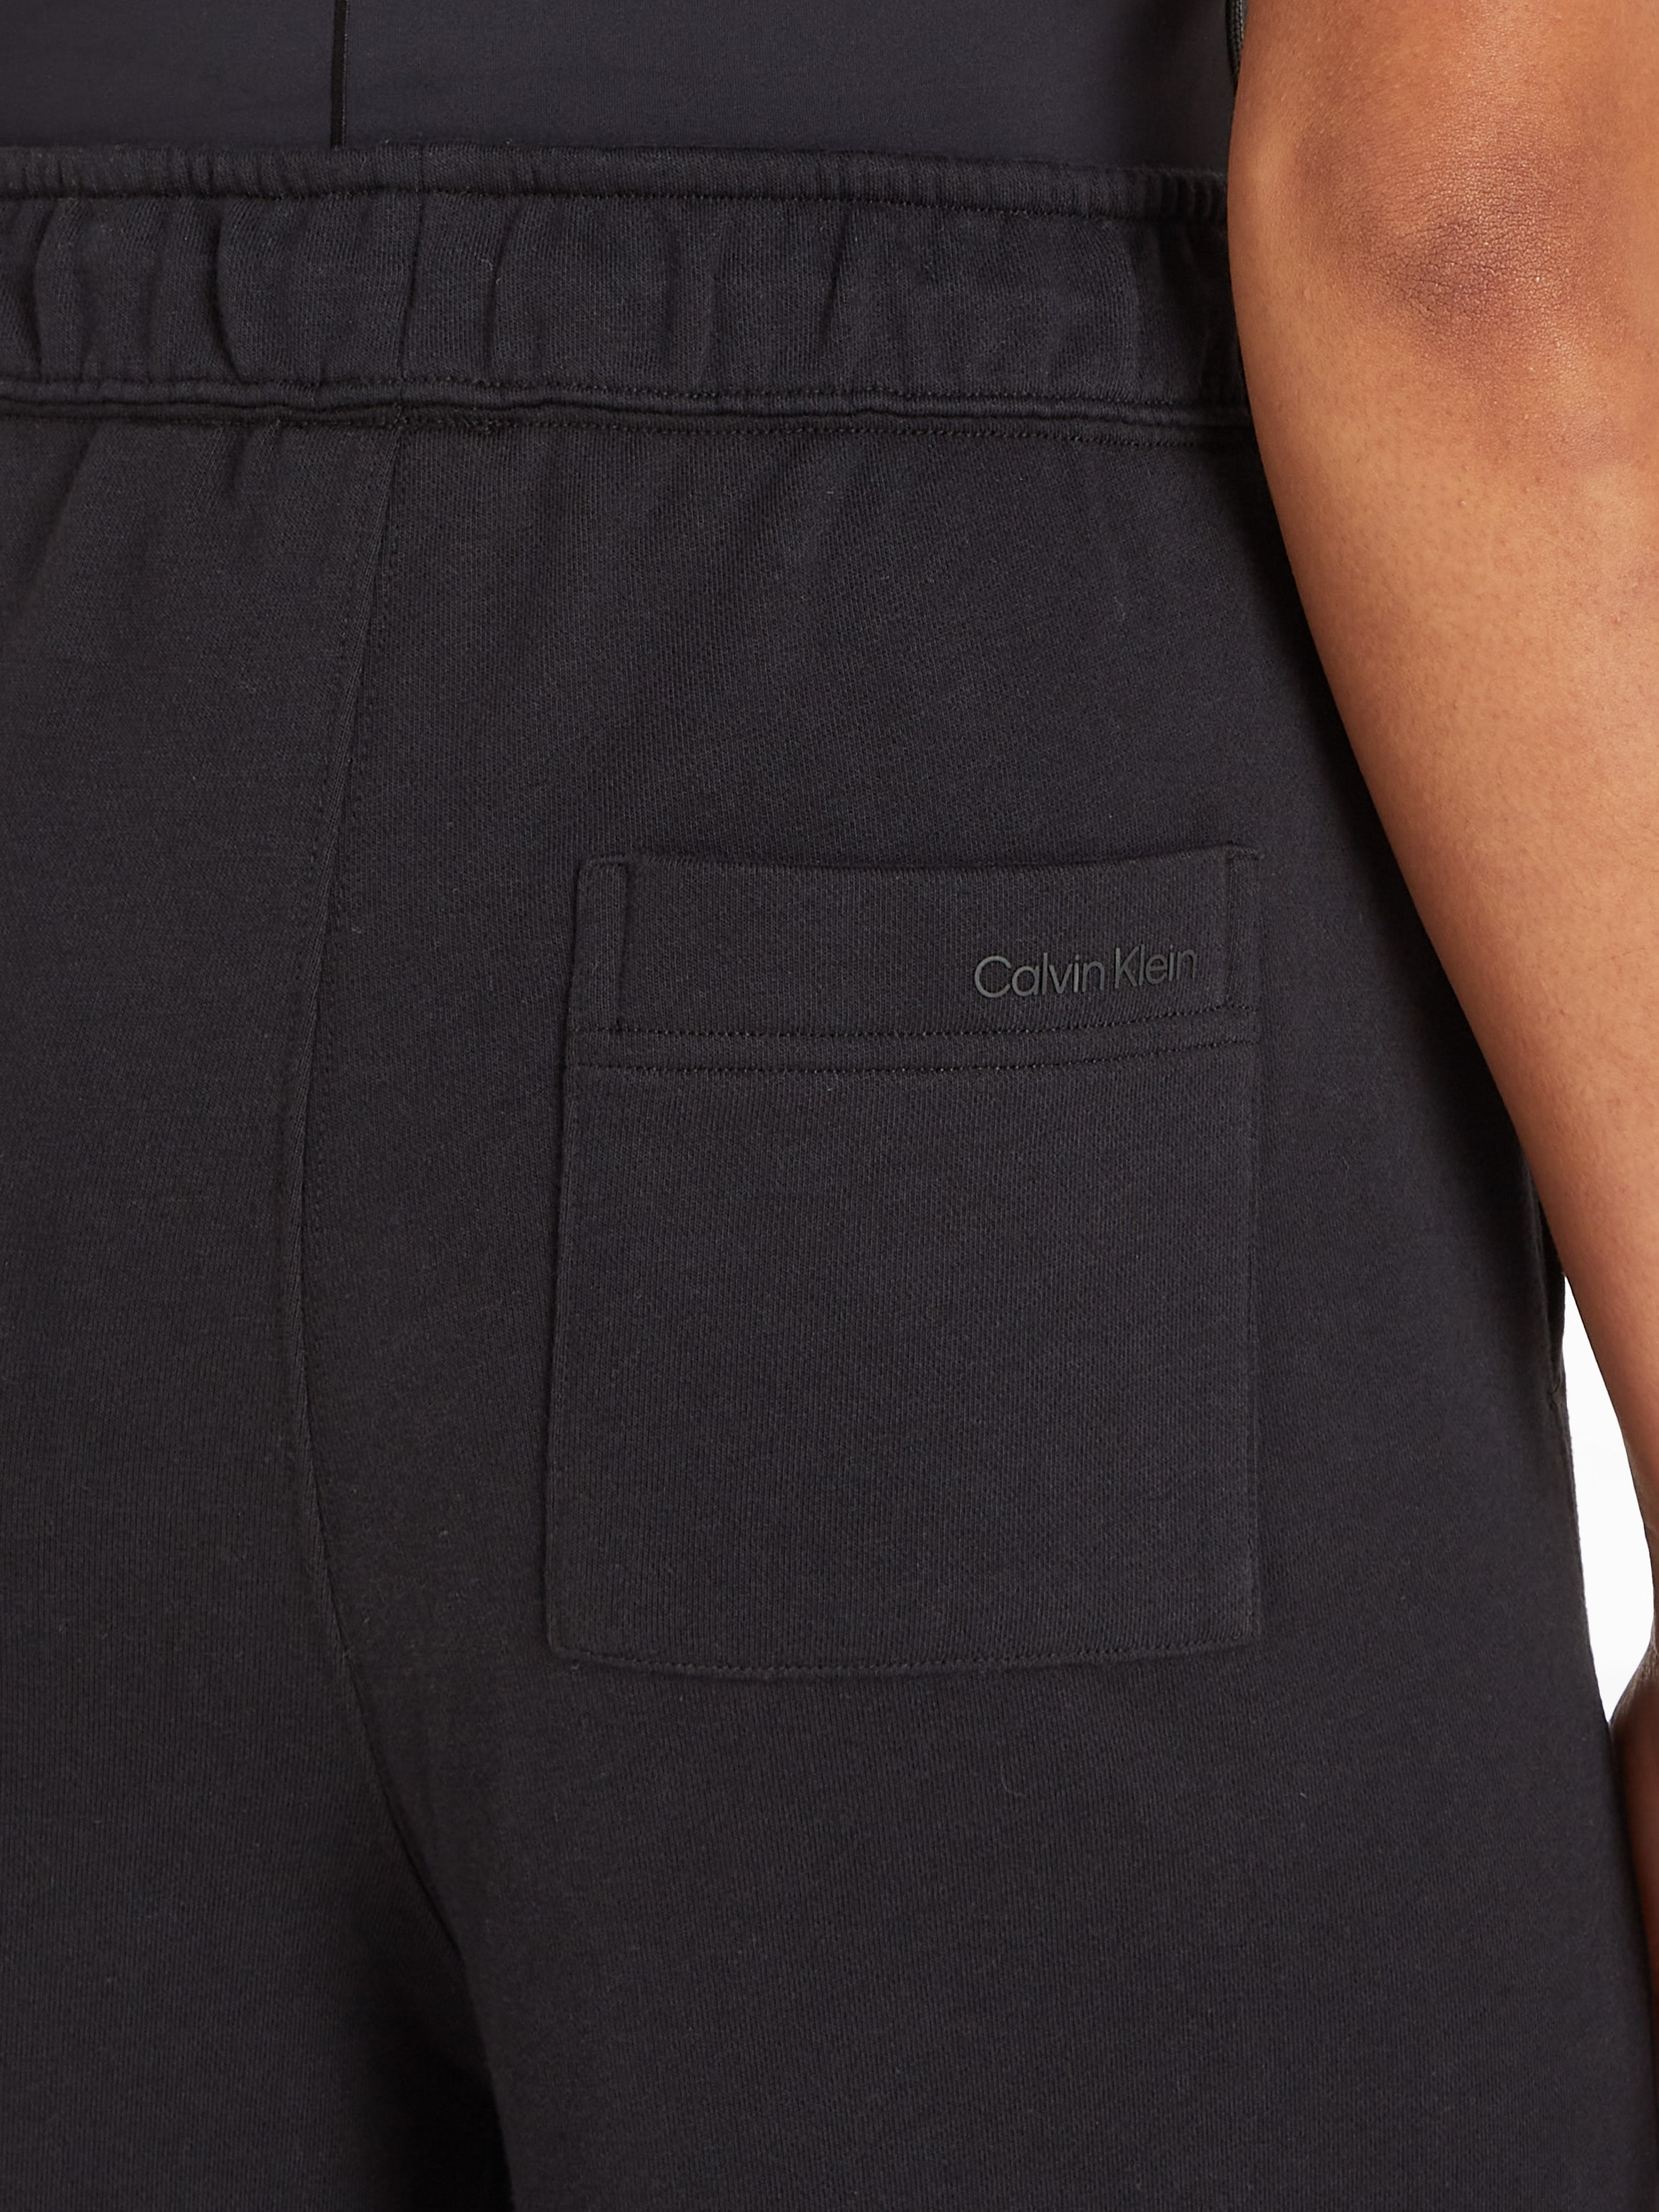 Calvin Klein Sport Jogginghose »PW Pant« Leg Wide shoppen 